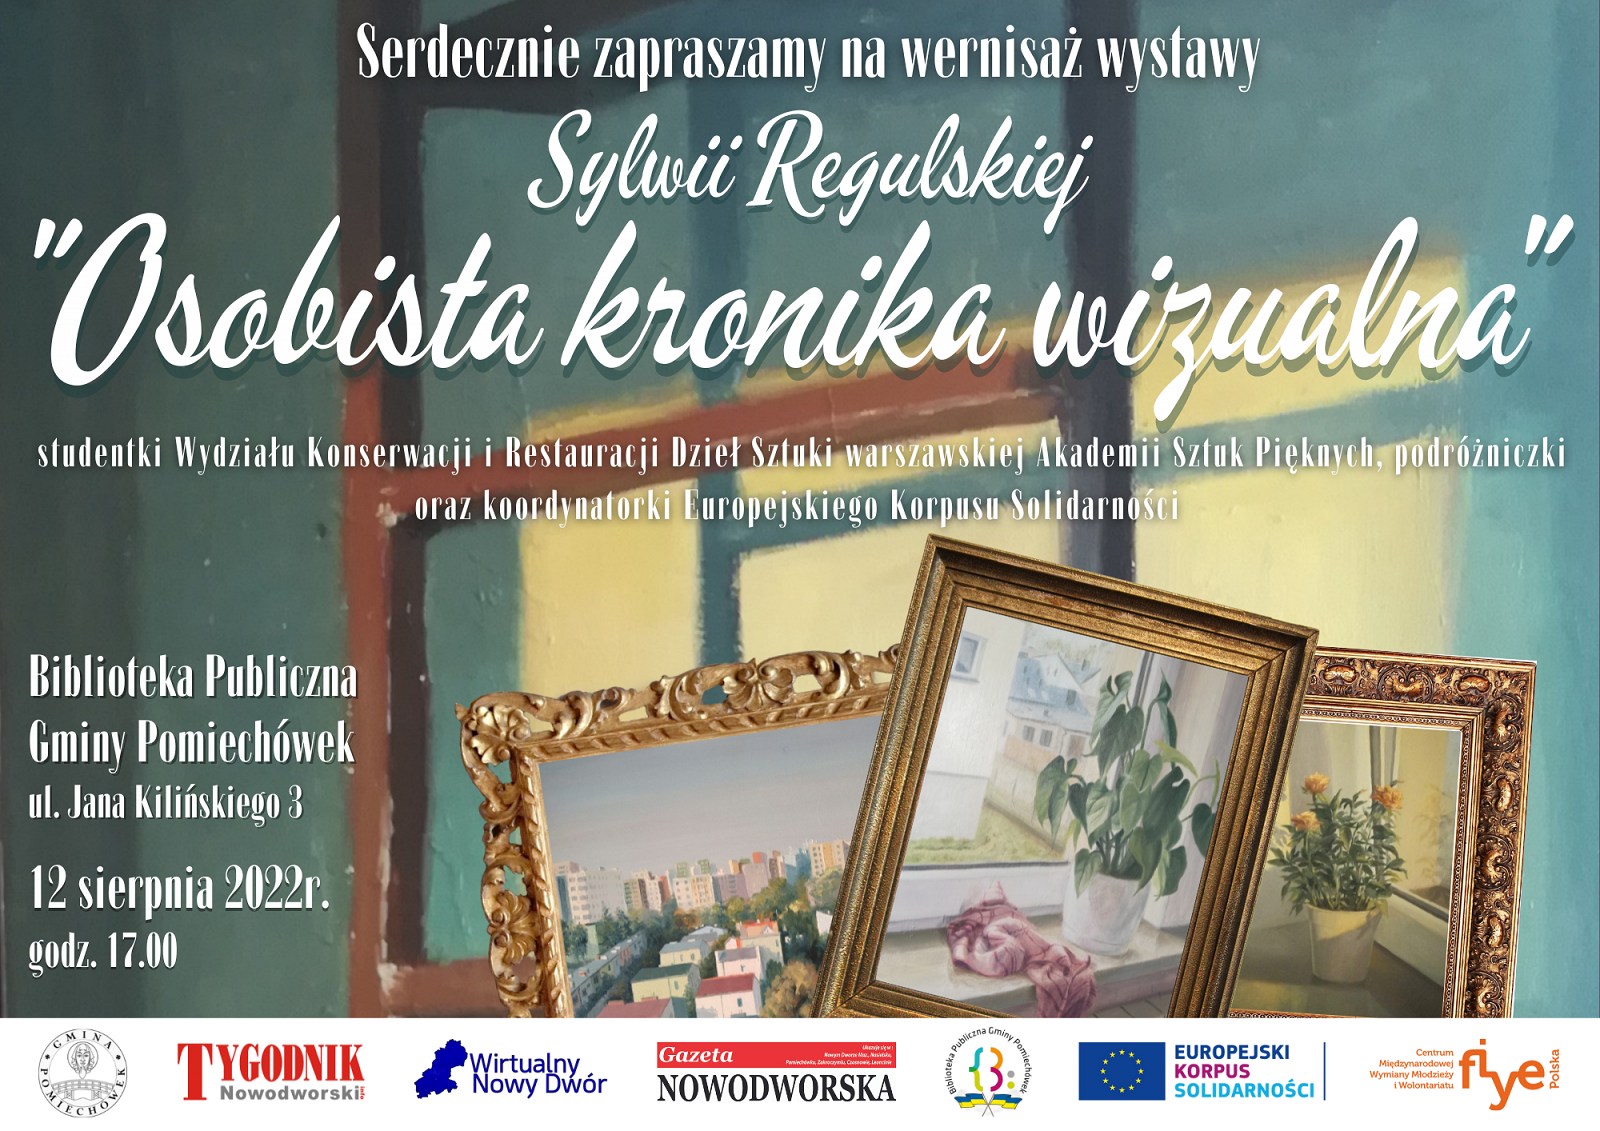 Plakat Sylwia Regulska.png [2.84 MB]